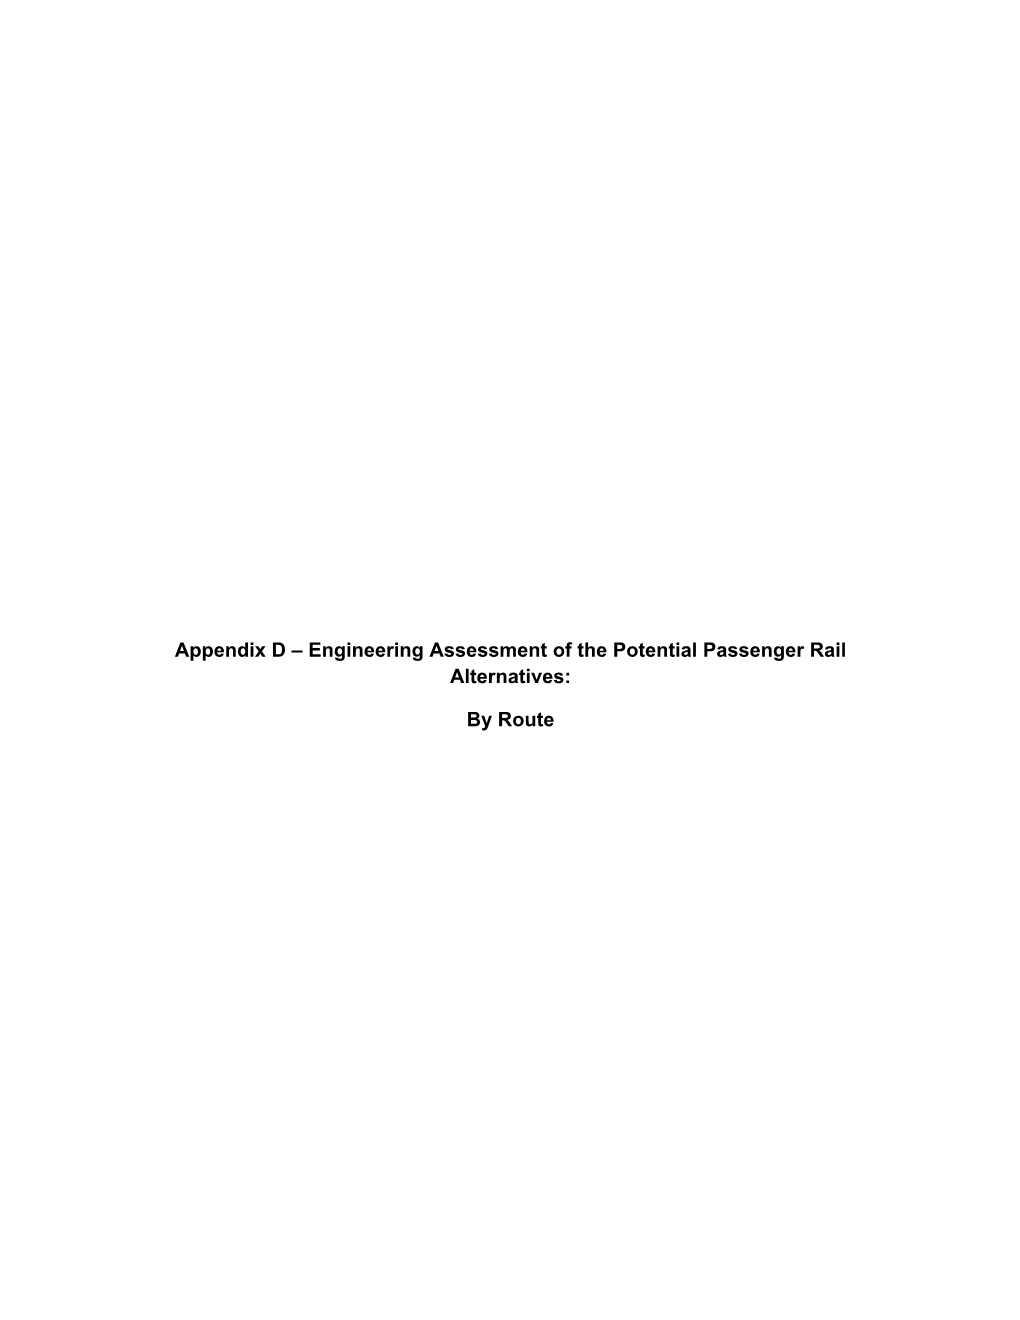 Appendix D – Engineering Assessment of the Potential Passenger Rail Alternatives